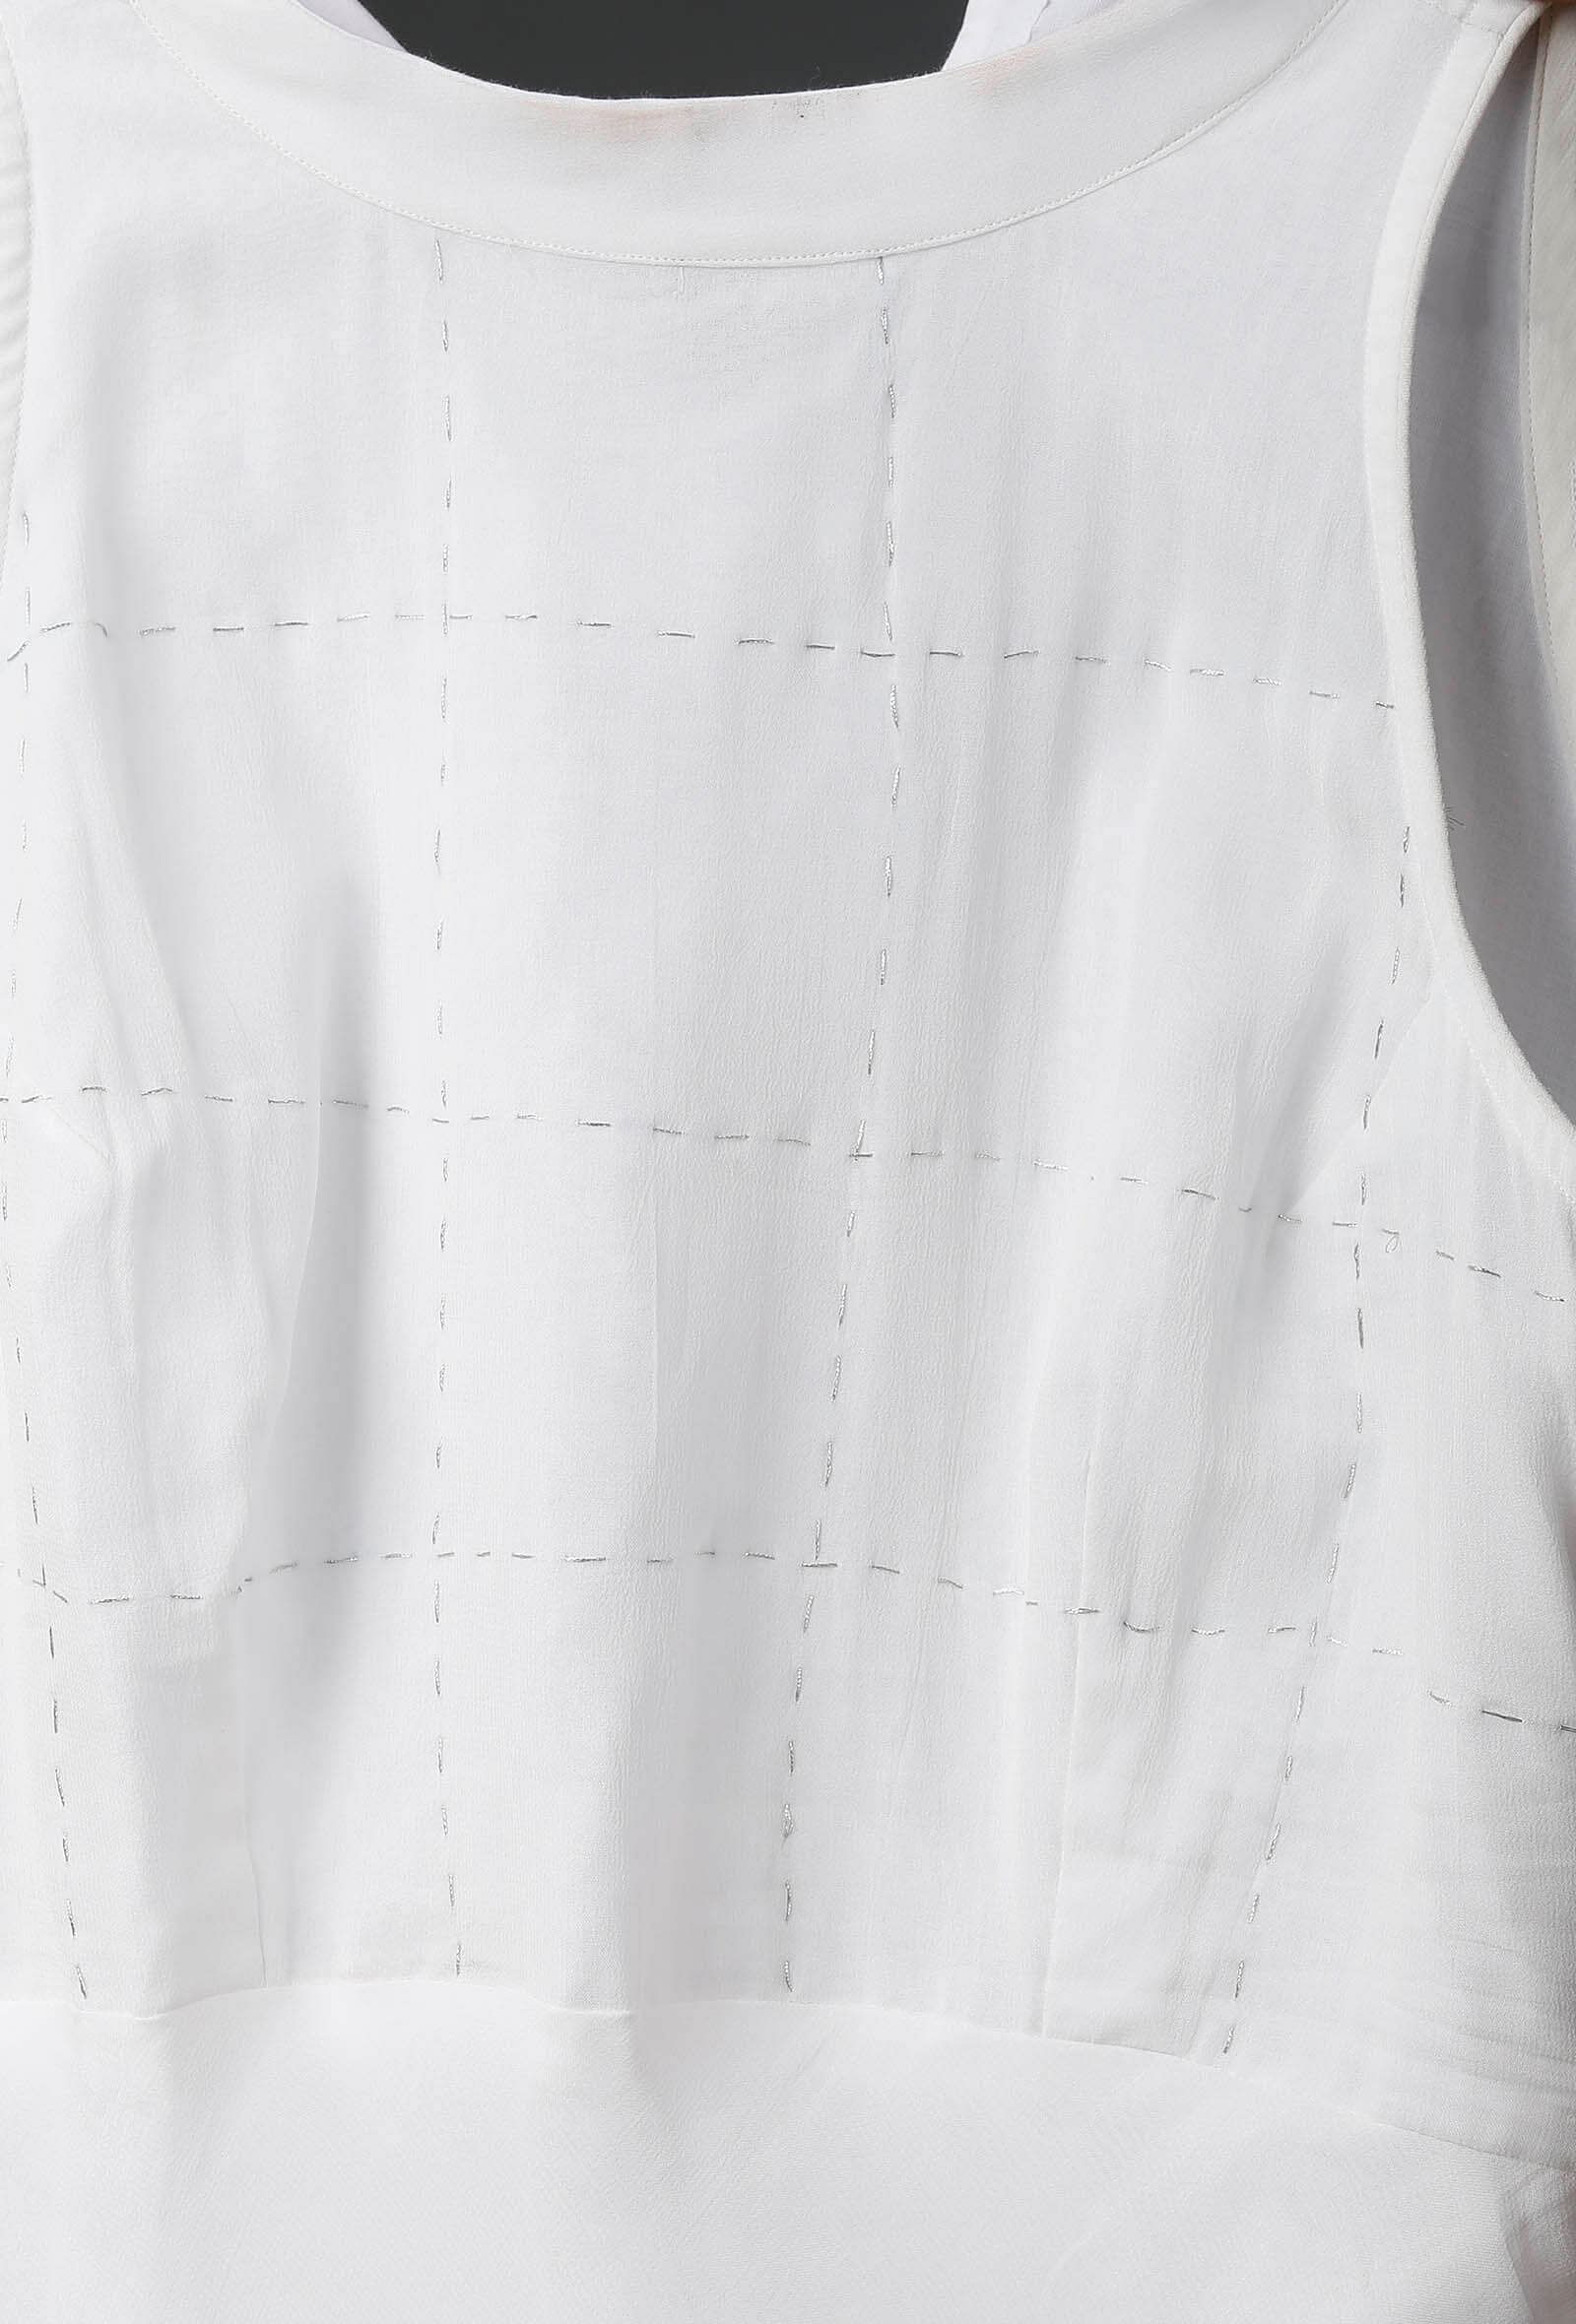 White Georgette Dress With Zari Embroidery